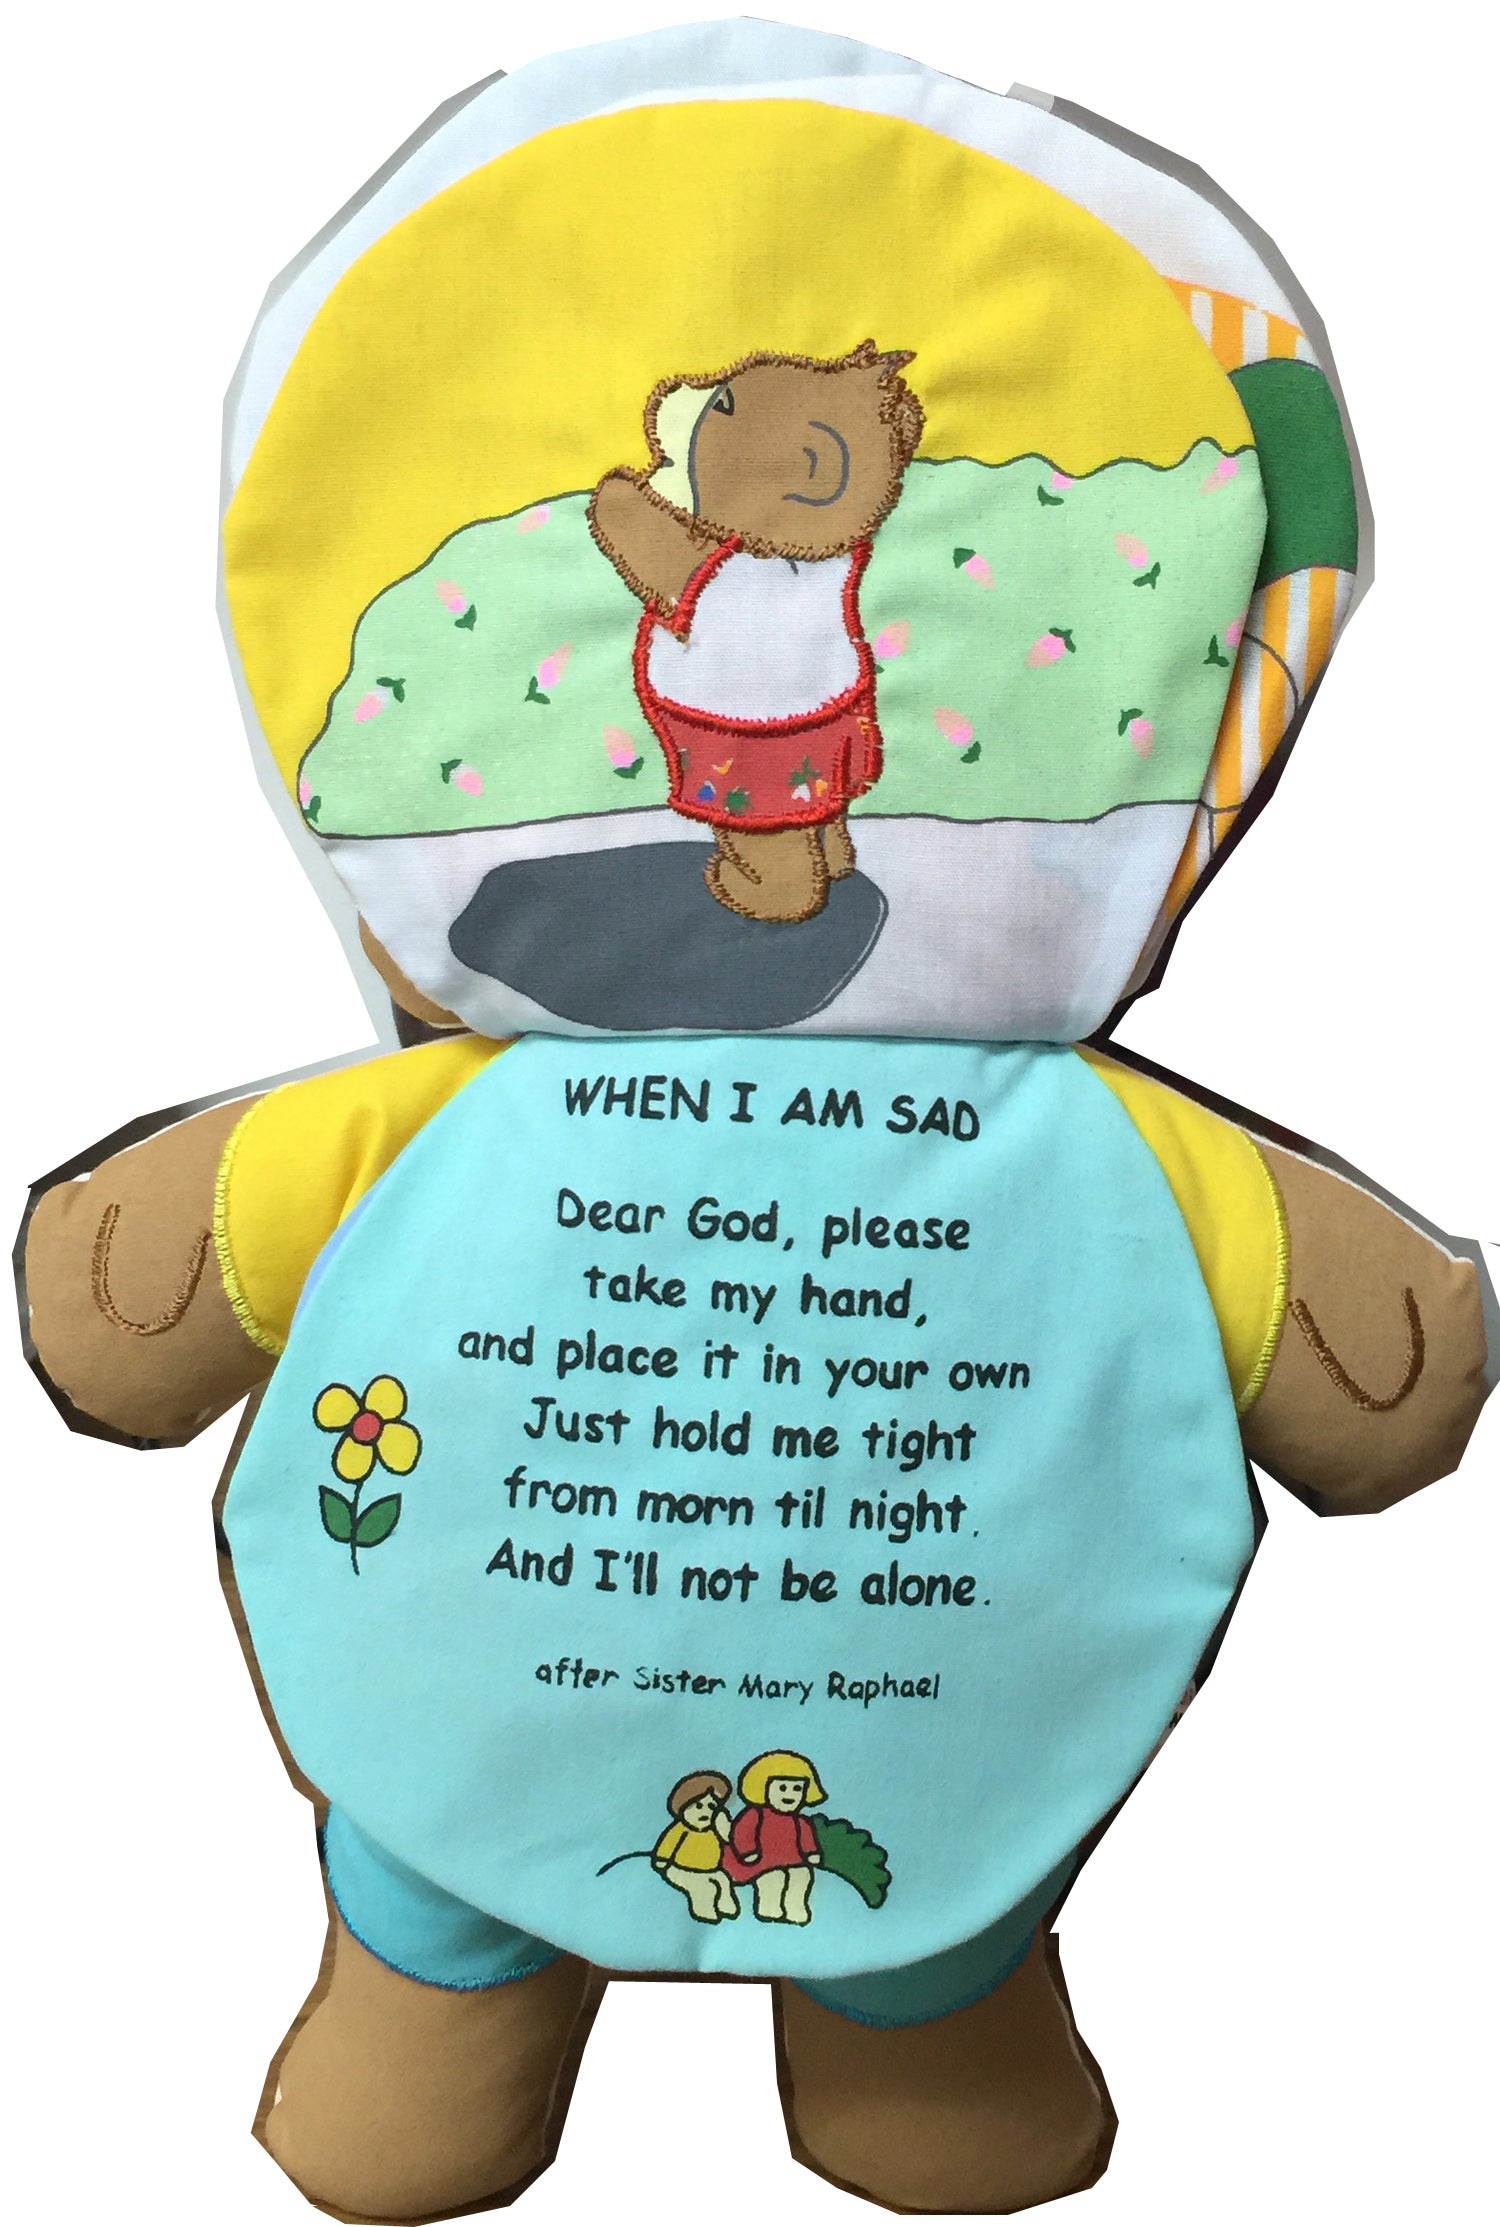 My Prayer Bear by Pockets of Learning